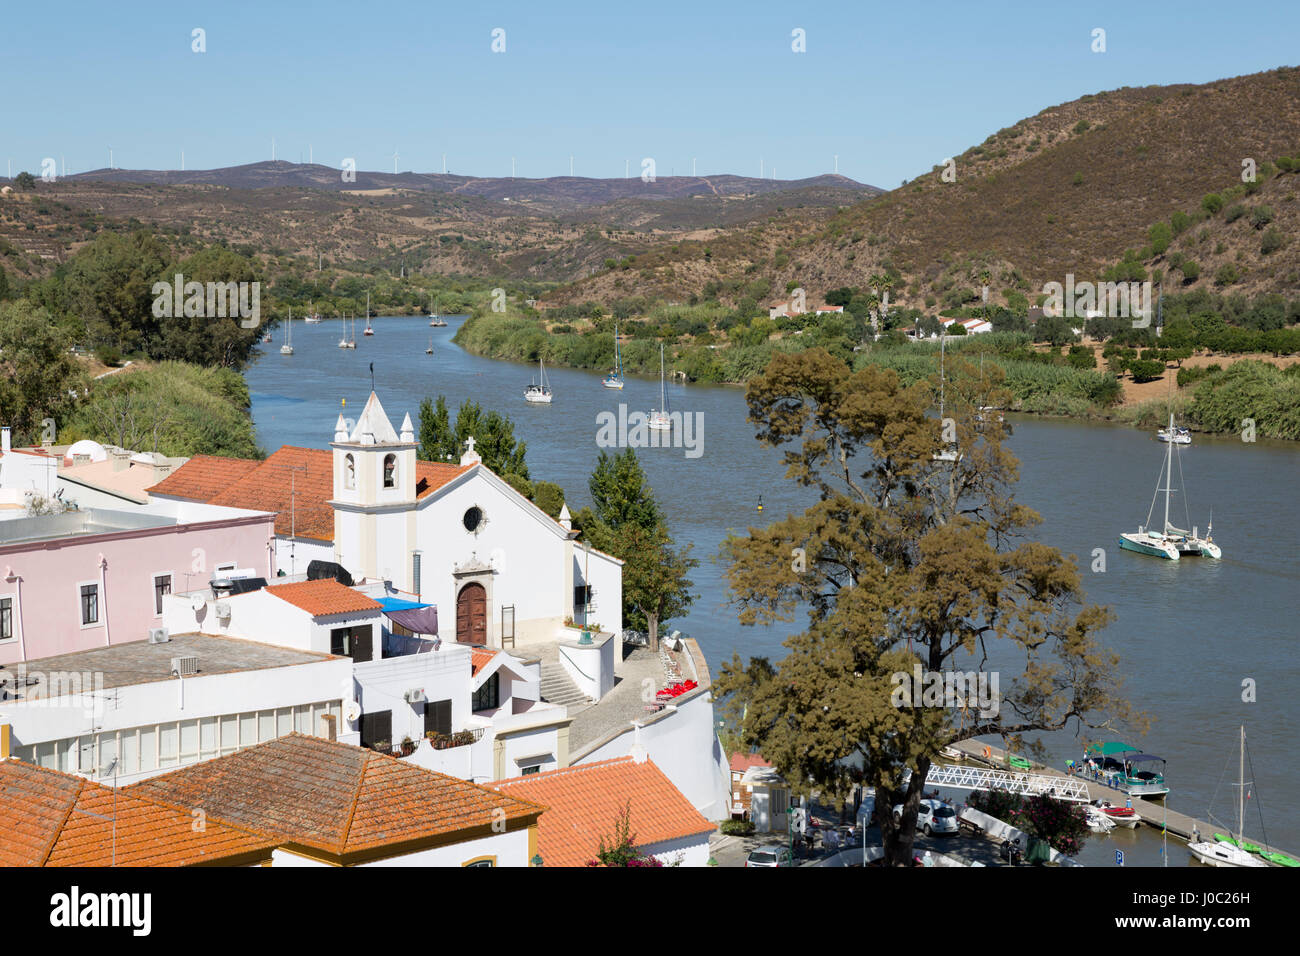 View over whitewashed village of Alcoutim on Rio Guadiana river, Alcoutim, Algarve, Portugal Stock Photo